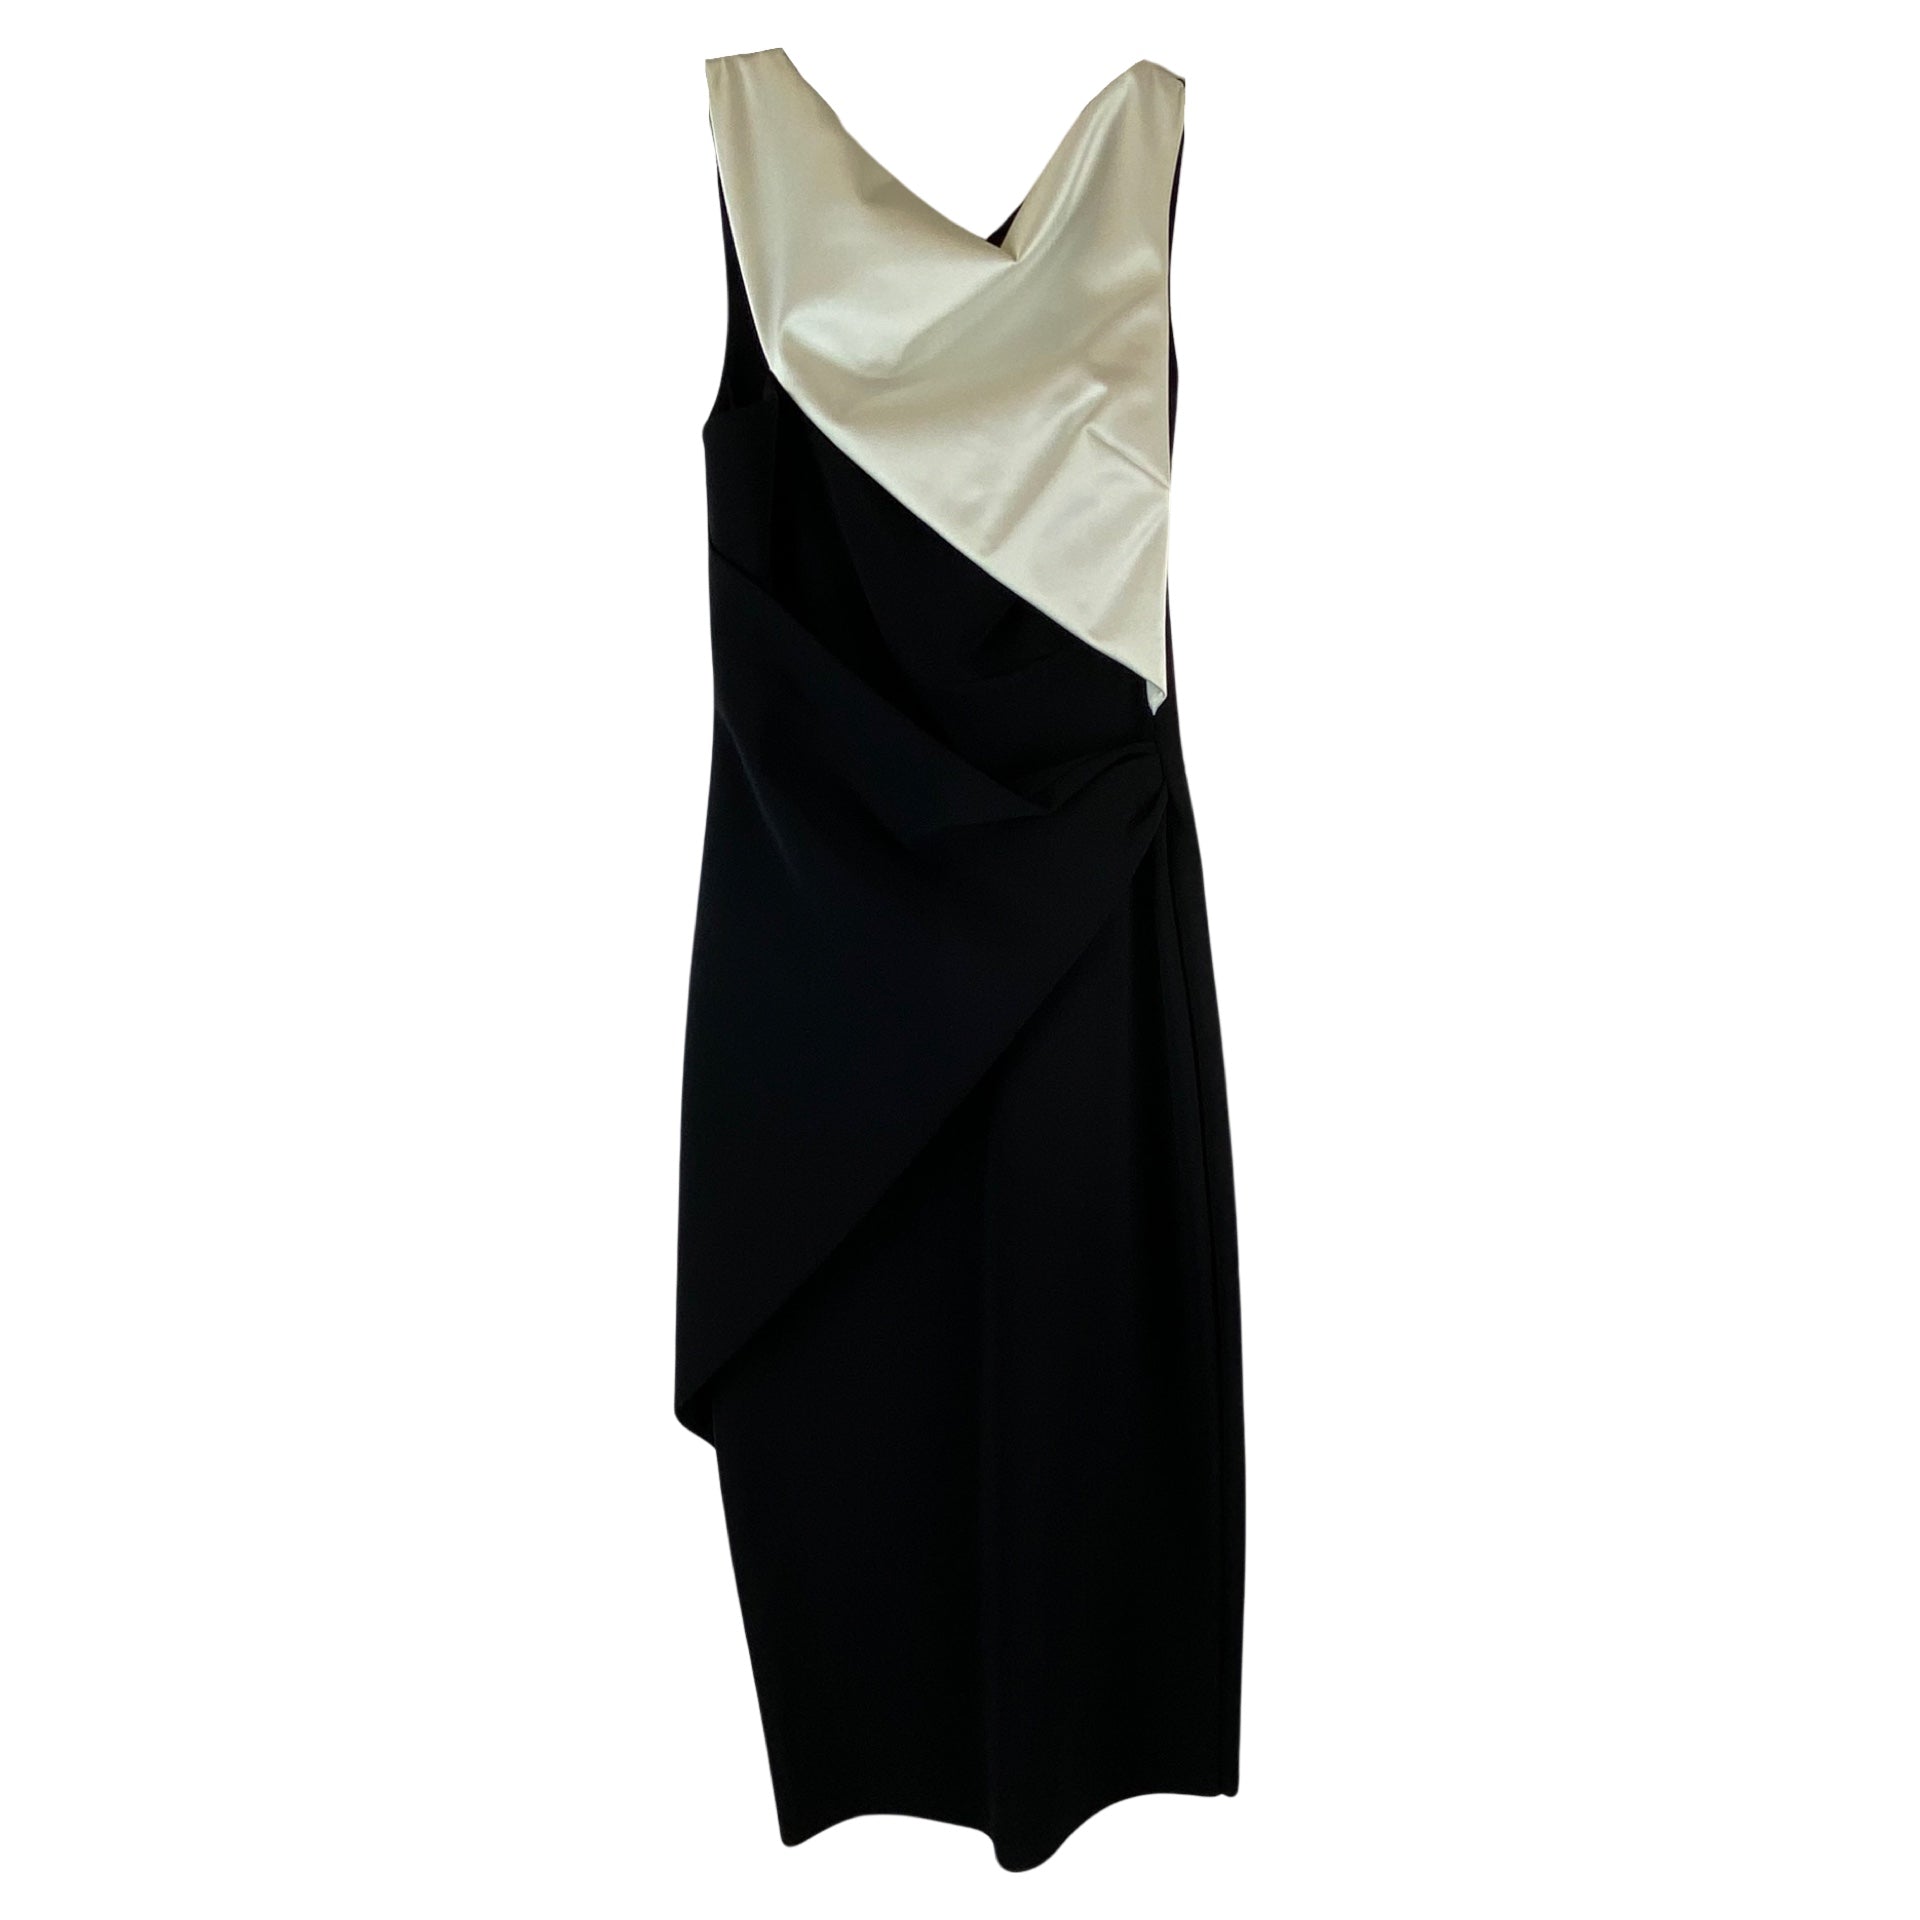 Chiara Boni Black and White Sleeveless Dress